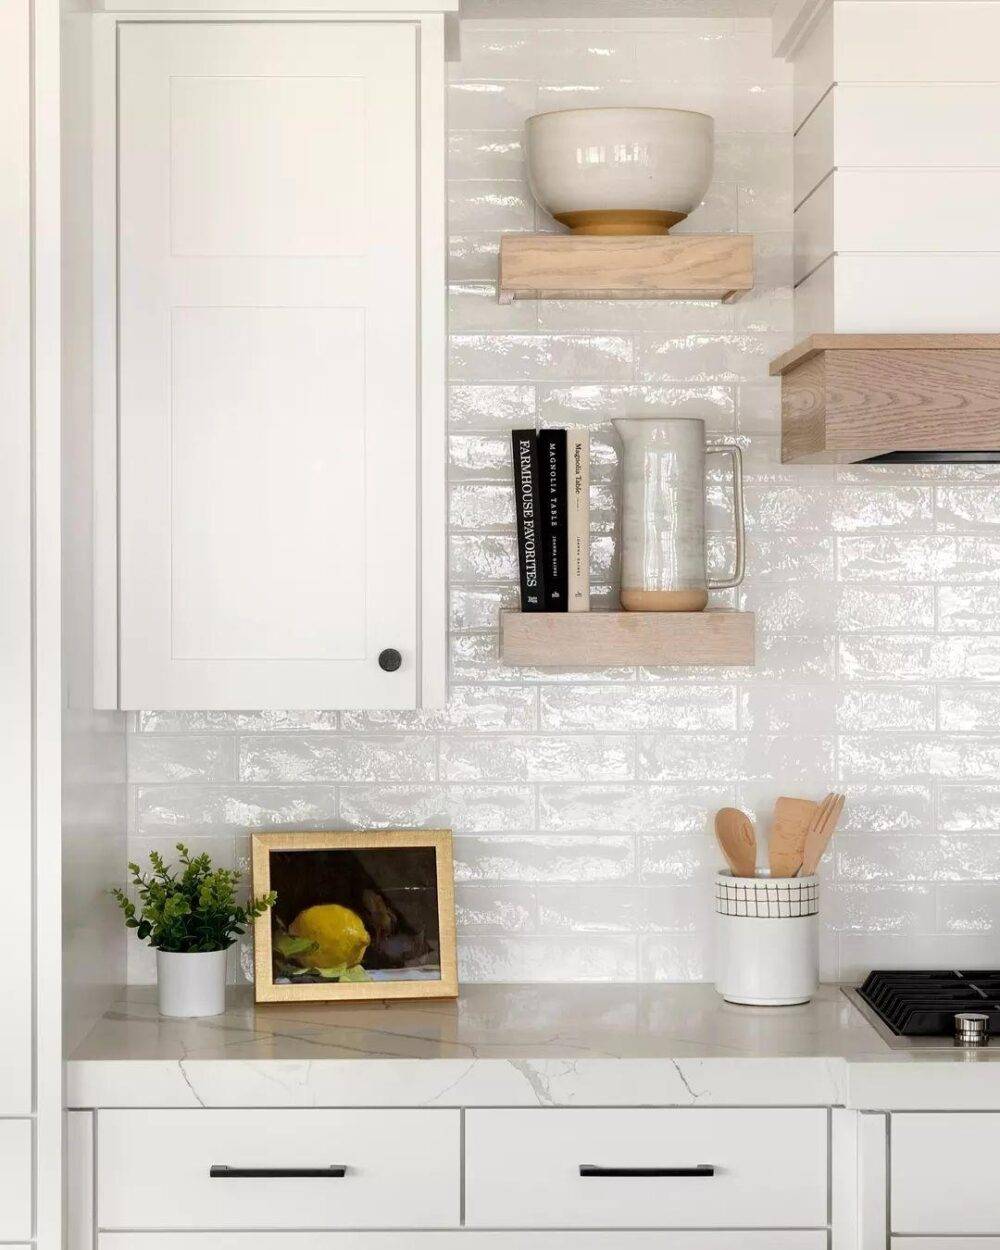 Kitchen counter with white subway tile backsplash.
